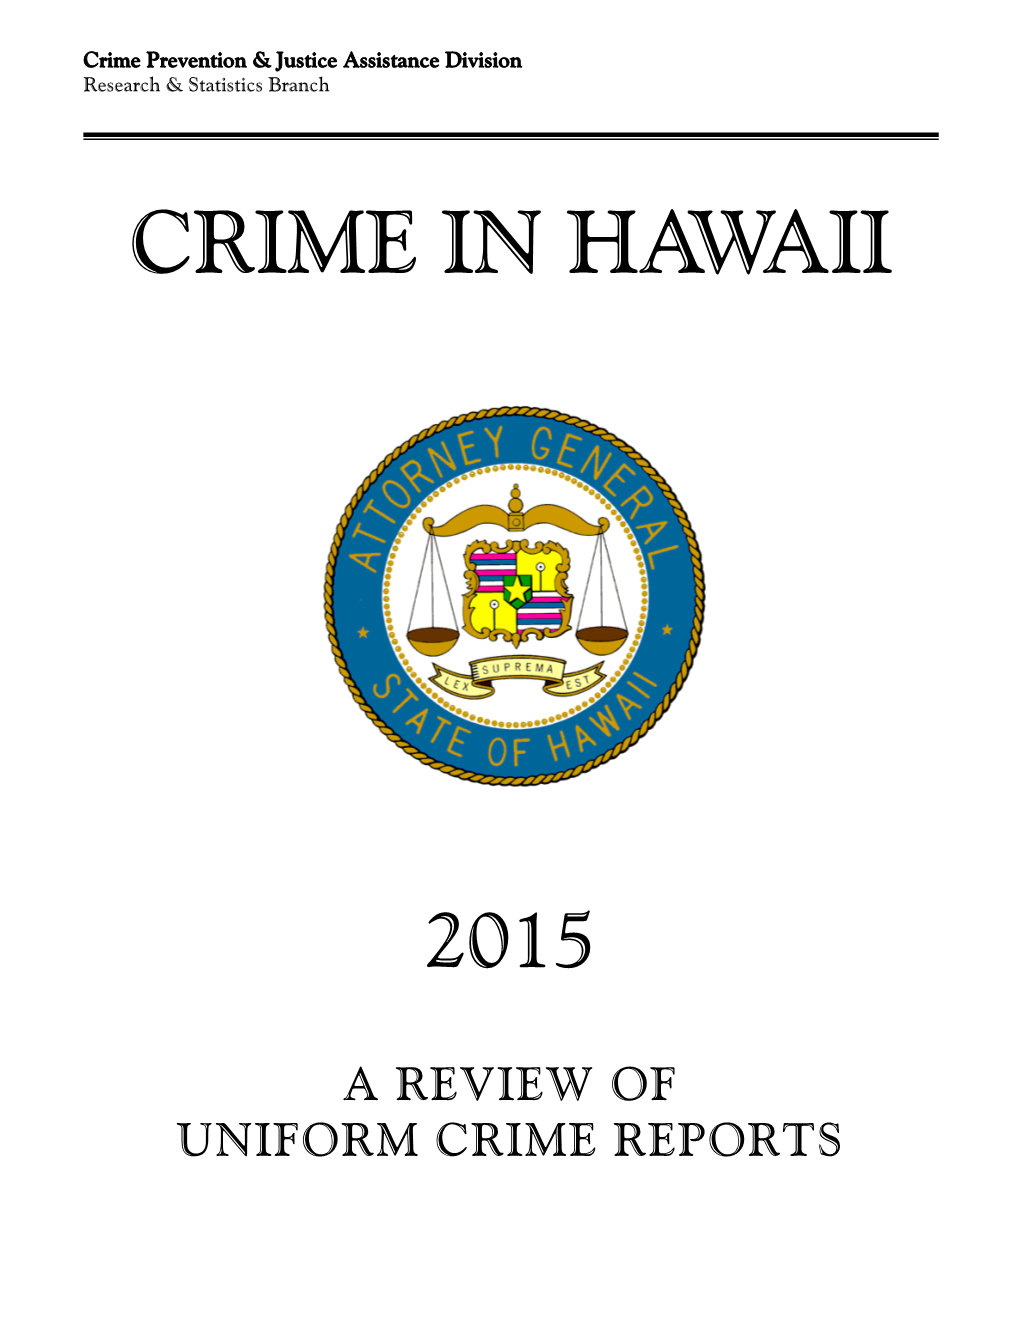 Crime in Hawaii, 2015